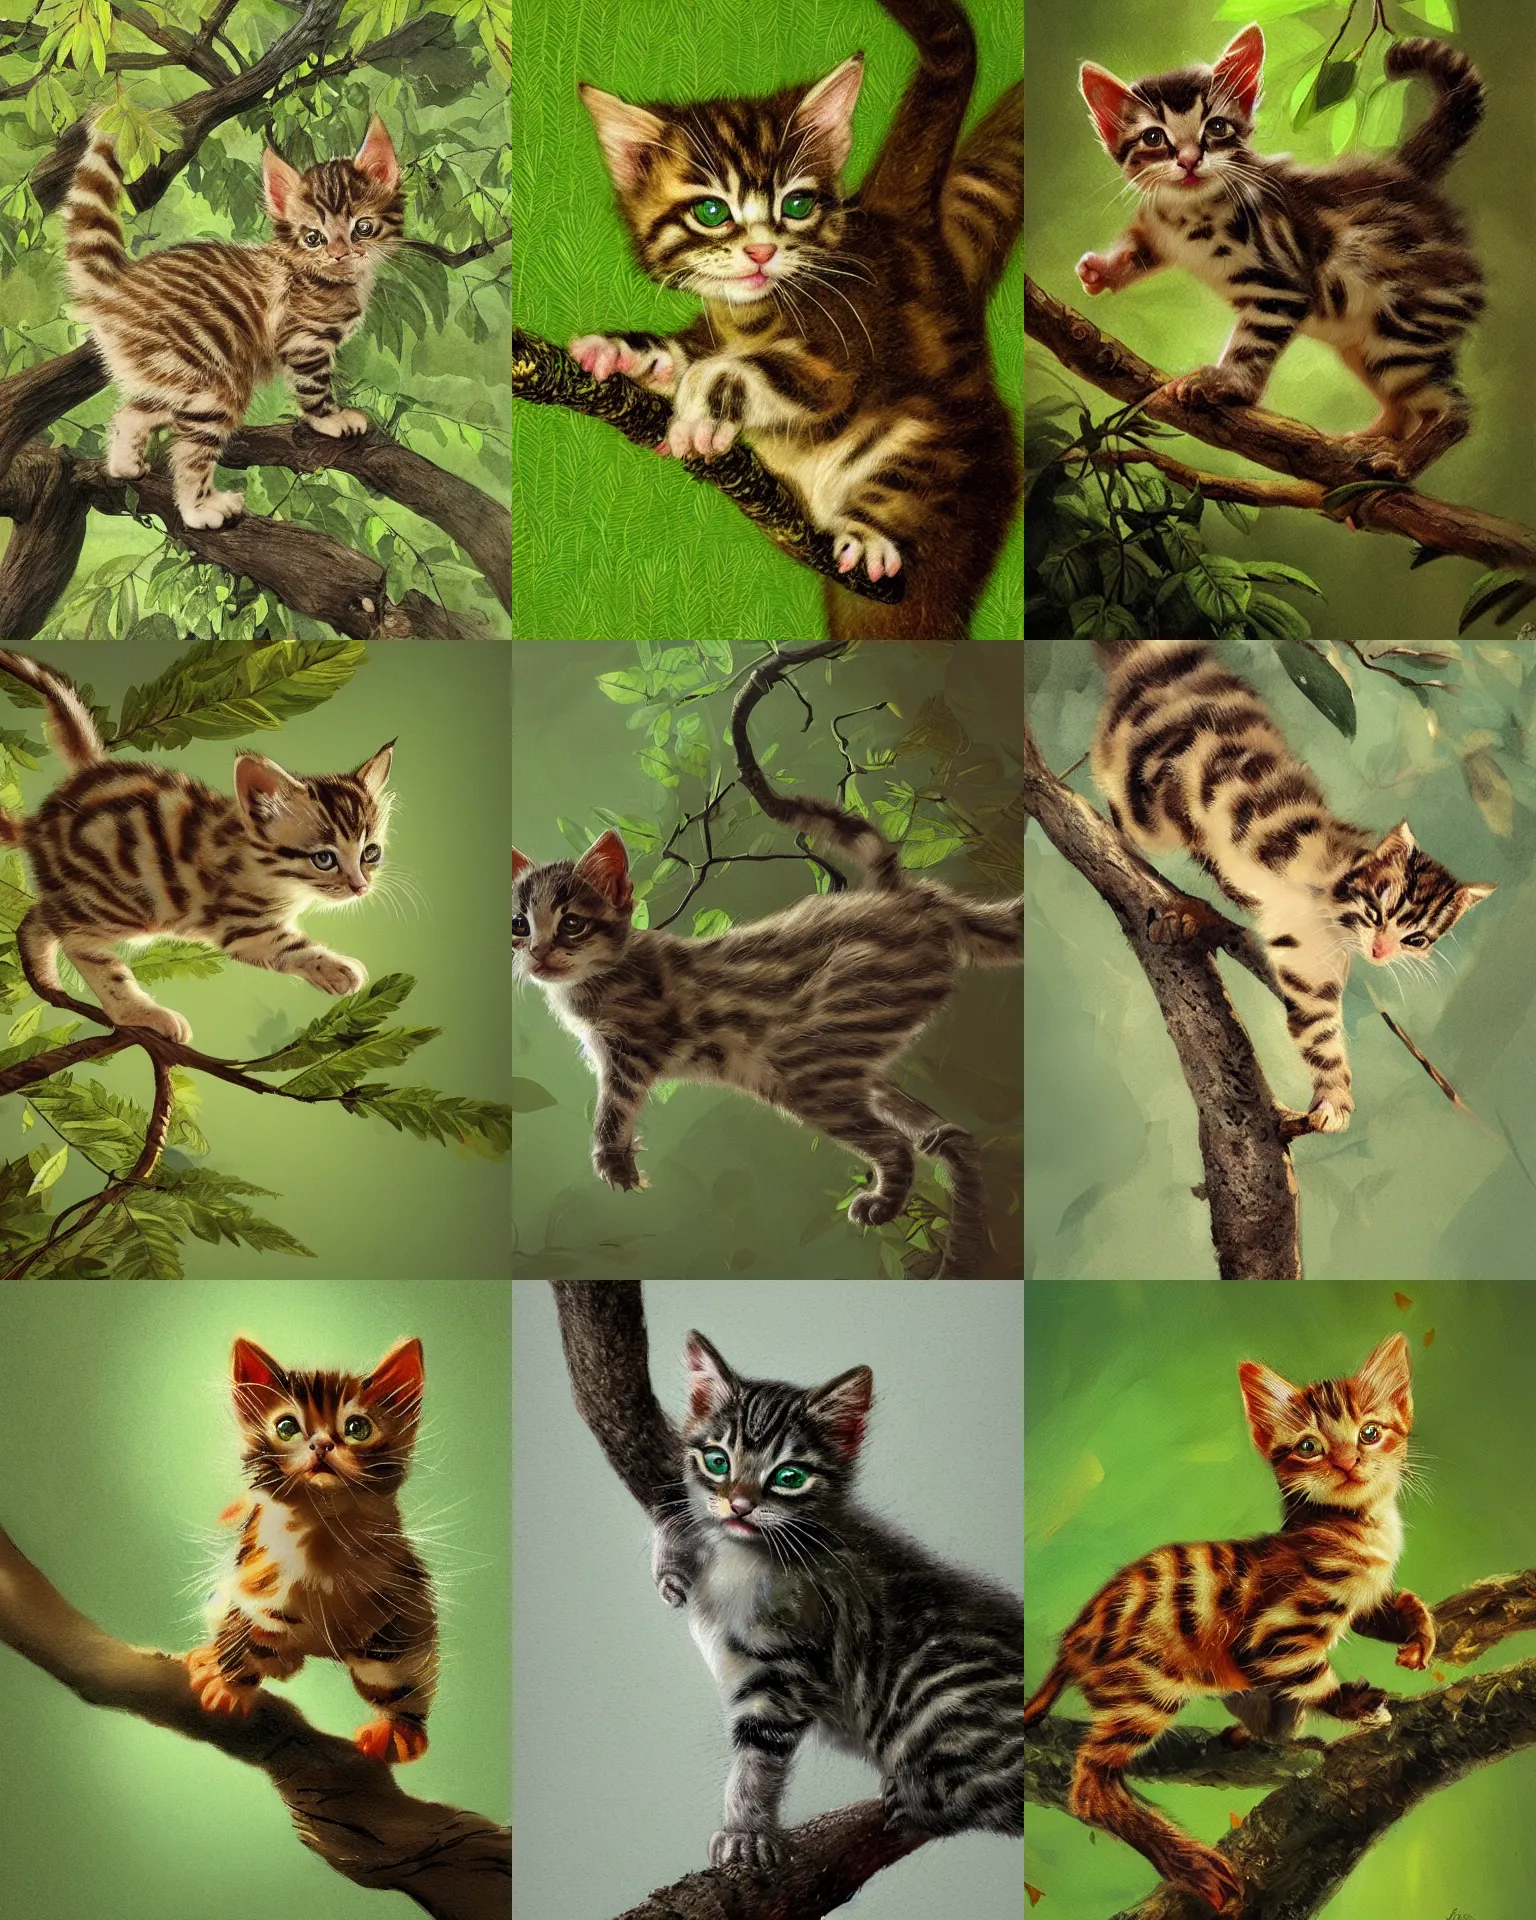 Prompt: green leaves kitten walking on tree branch, intricate, highly detailed, artstation, sharp focus, illustration, jurgens, rutkowski, frazetta